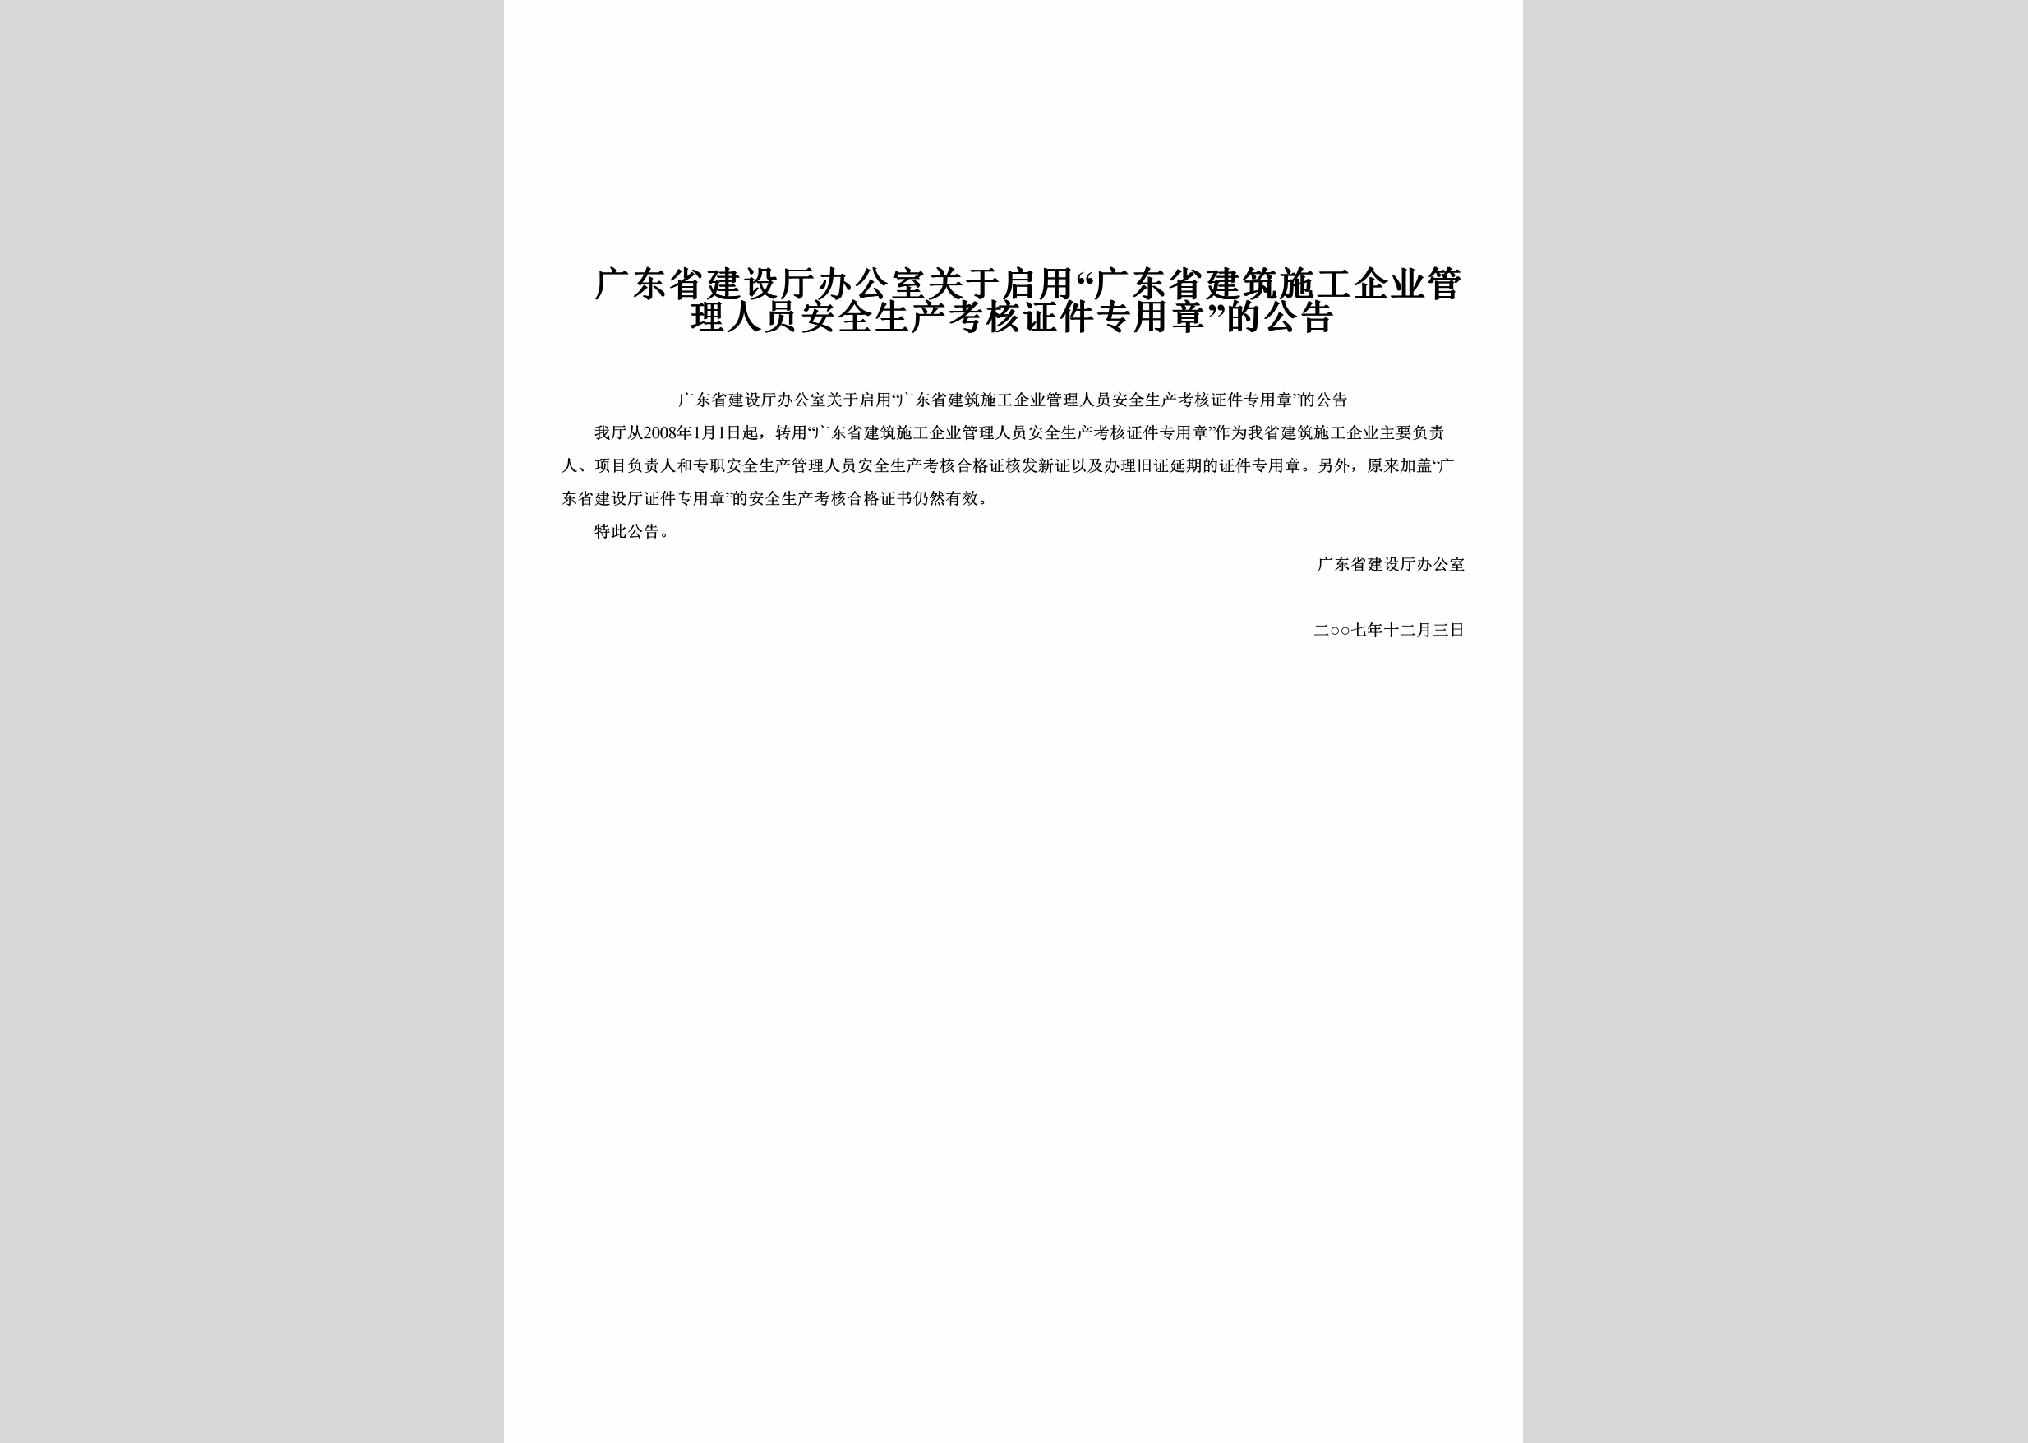 GD-GDSJZSGQ-2008：关于启用“广东省建筑施工企业管理人员安全生产考核证件专用章”的公告